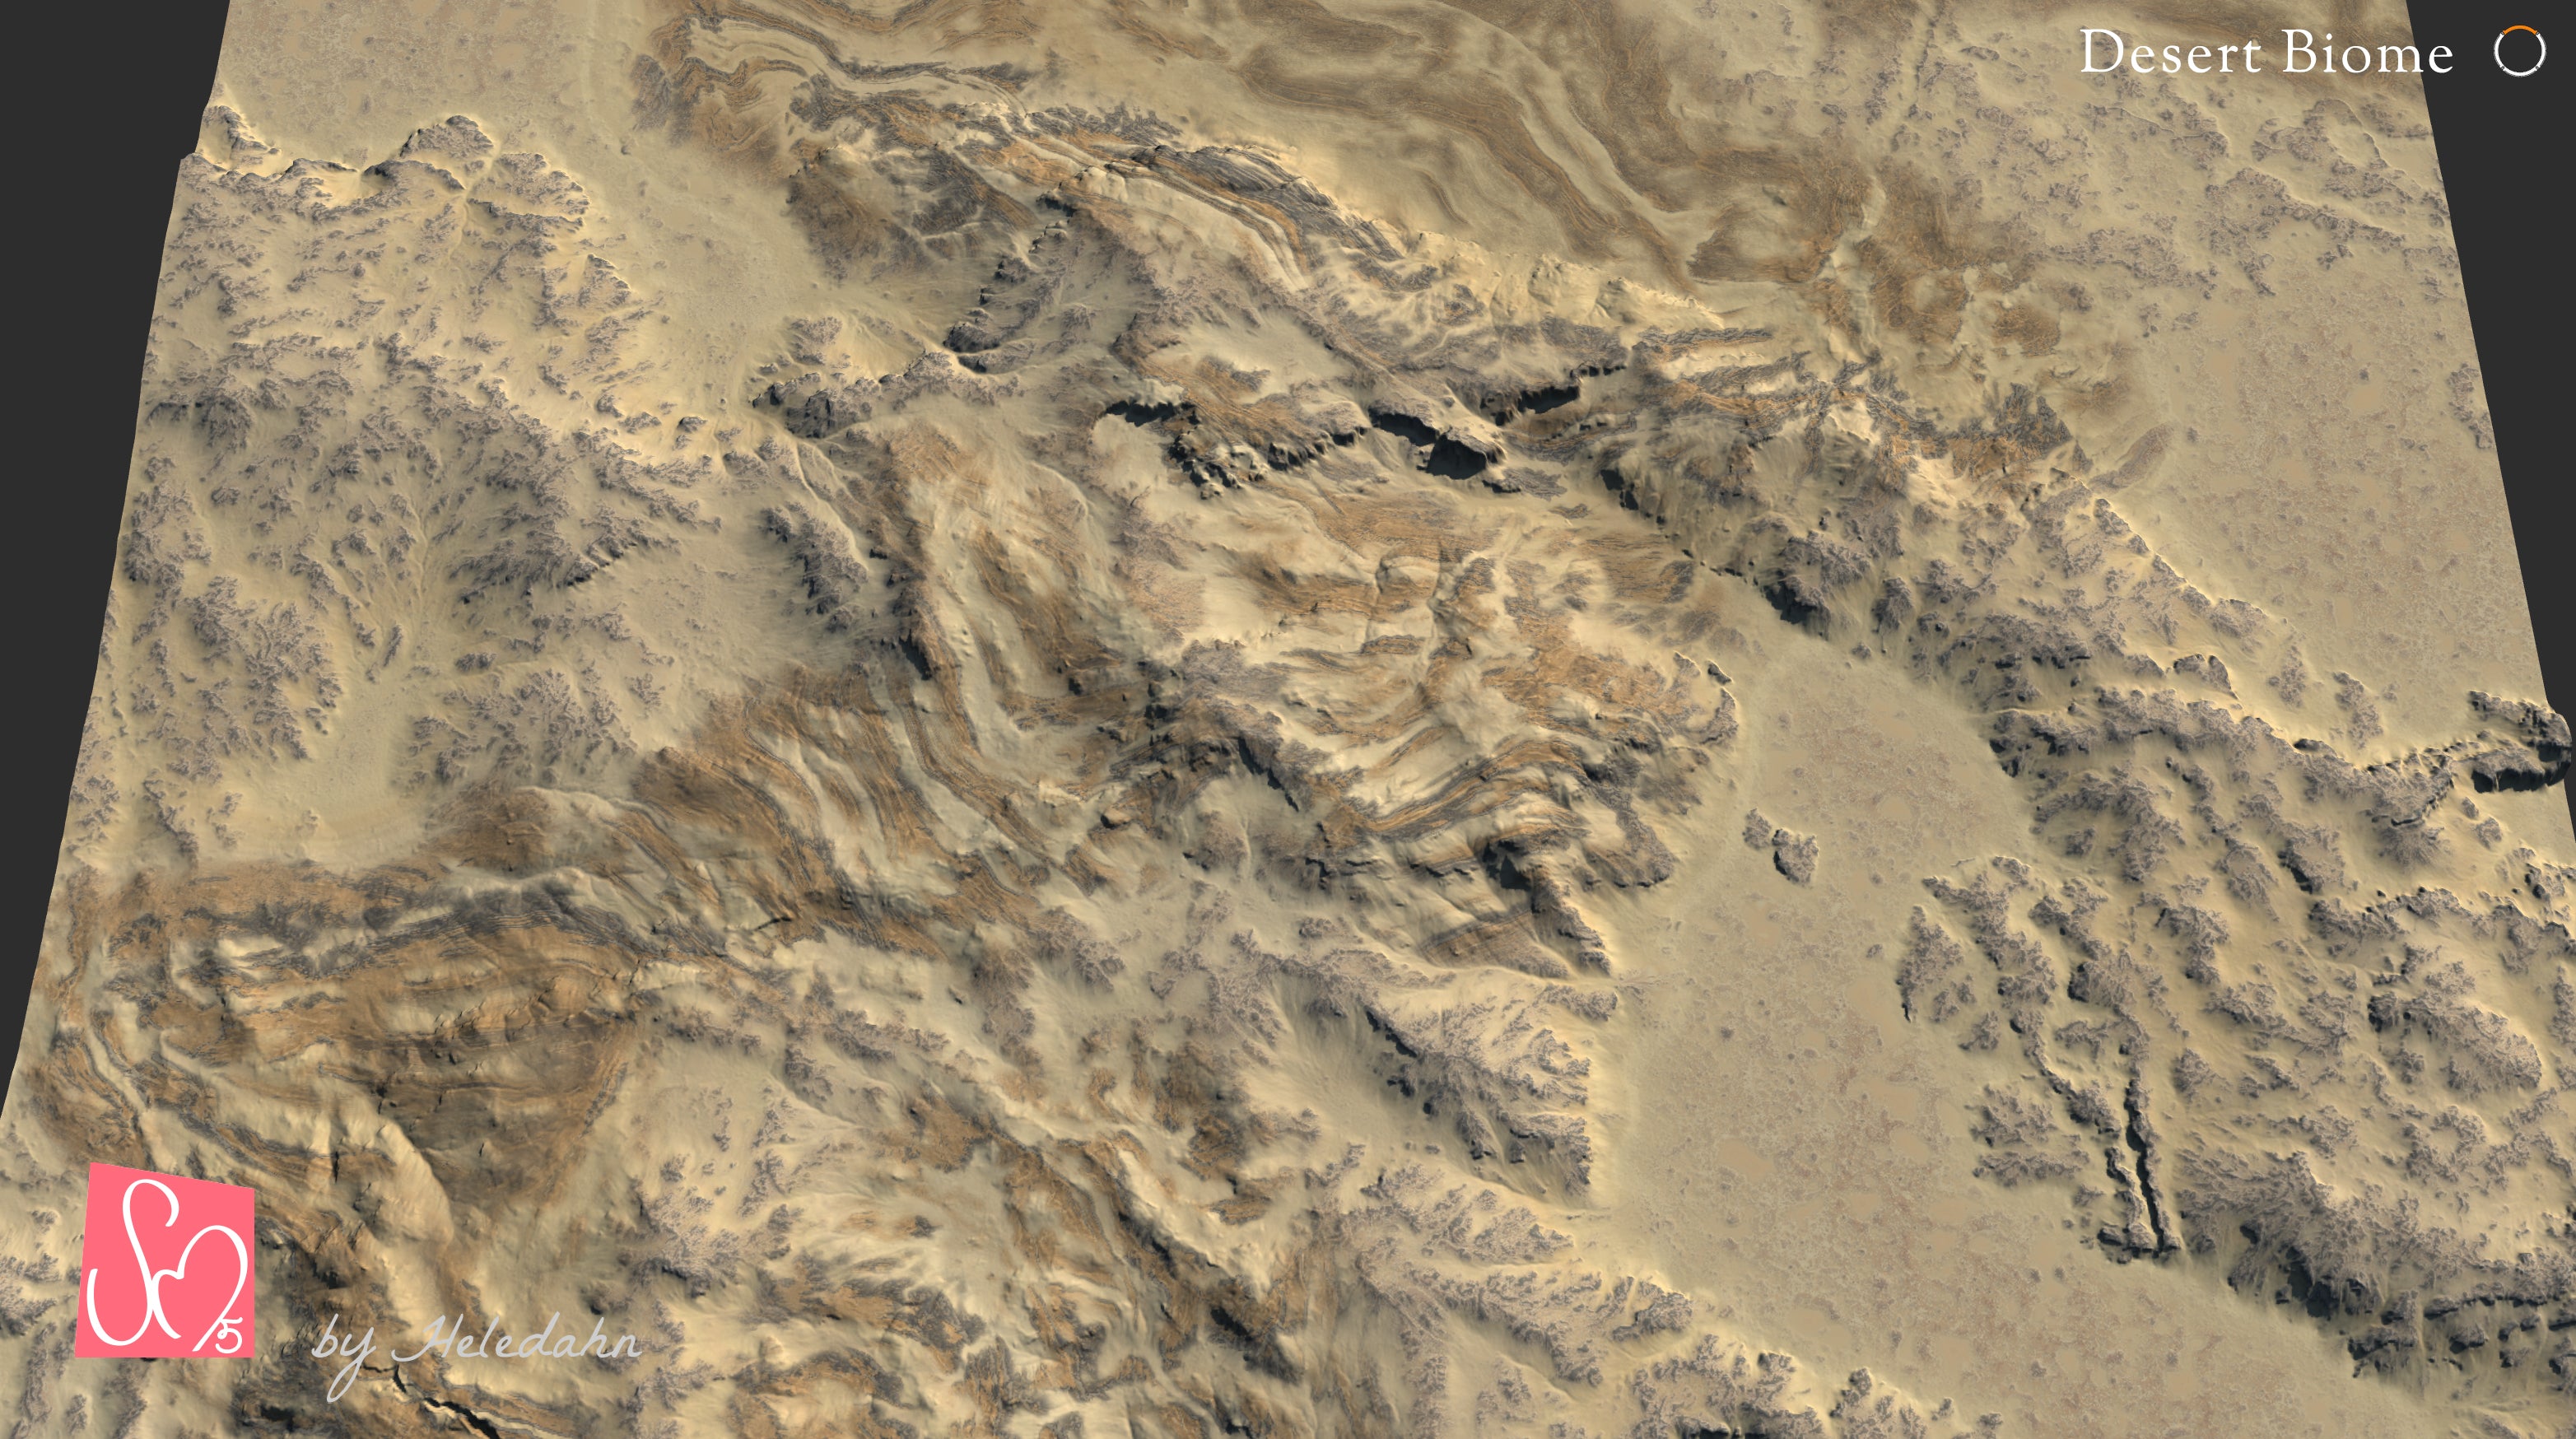 Gaea desert biome terrain 3D model by Heledahn